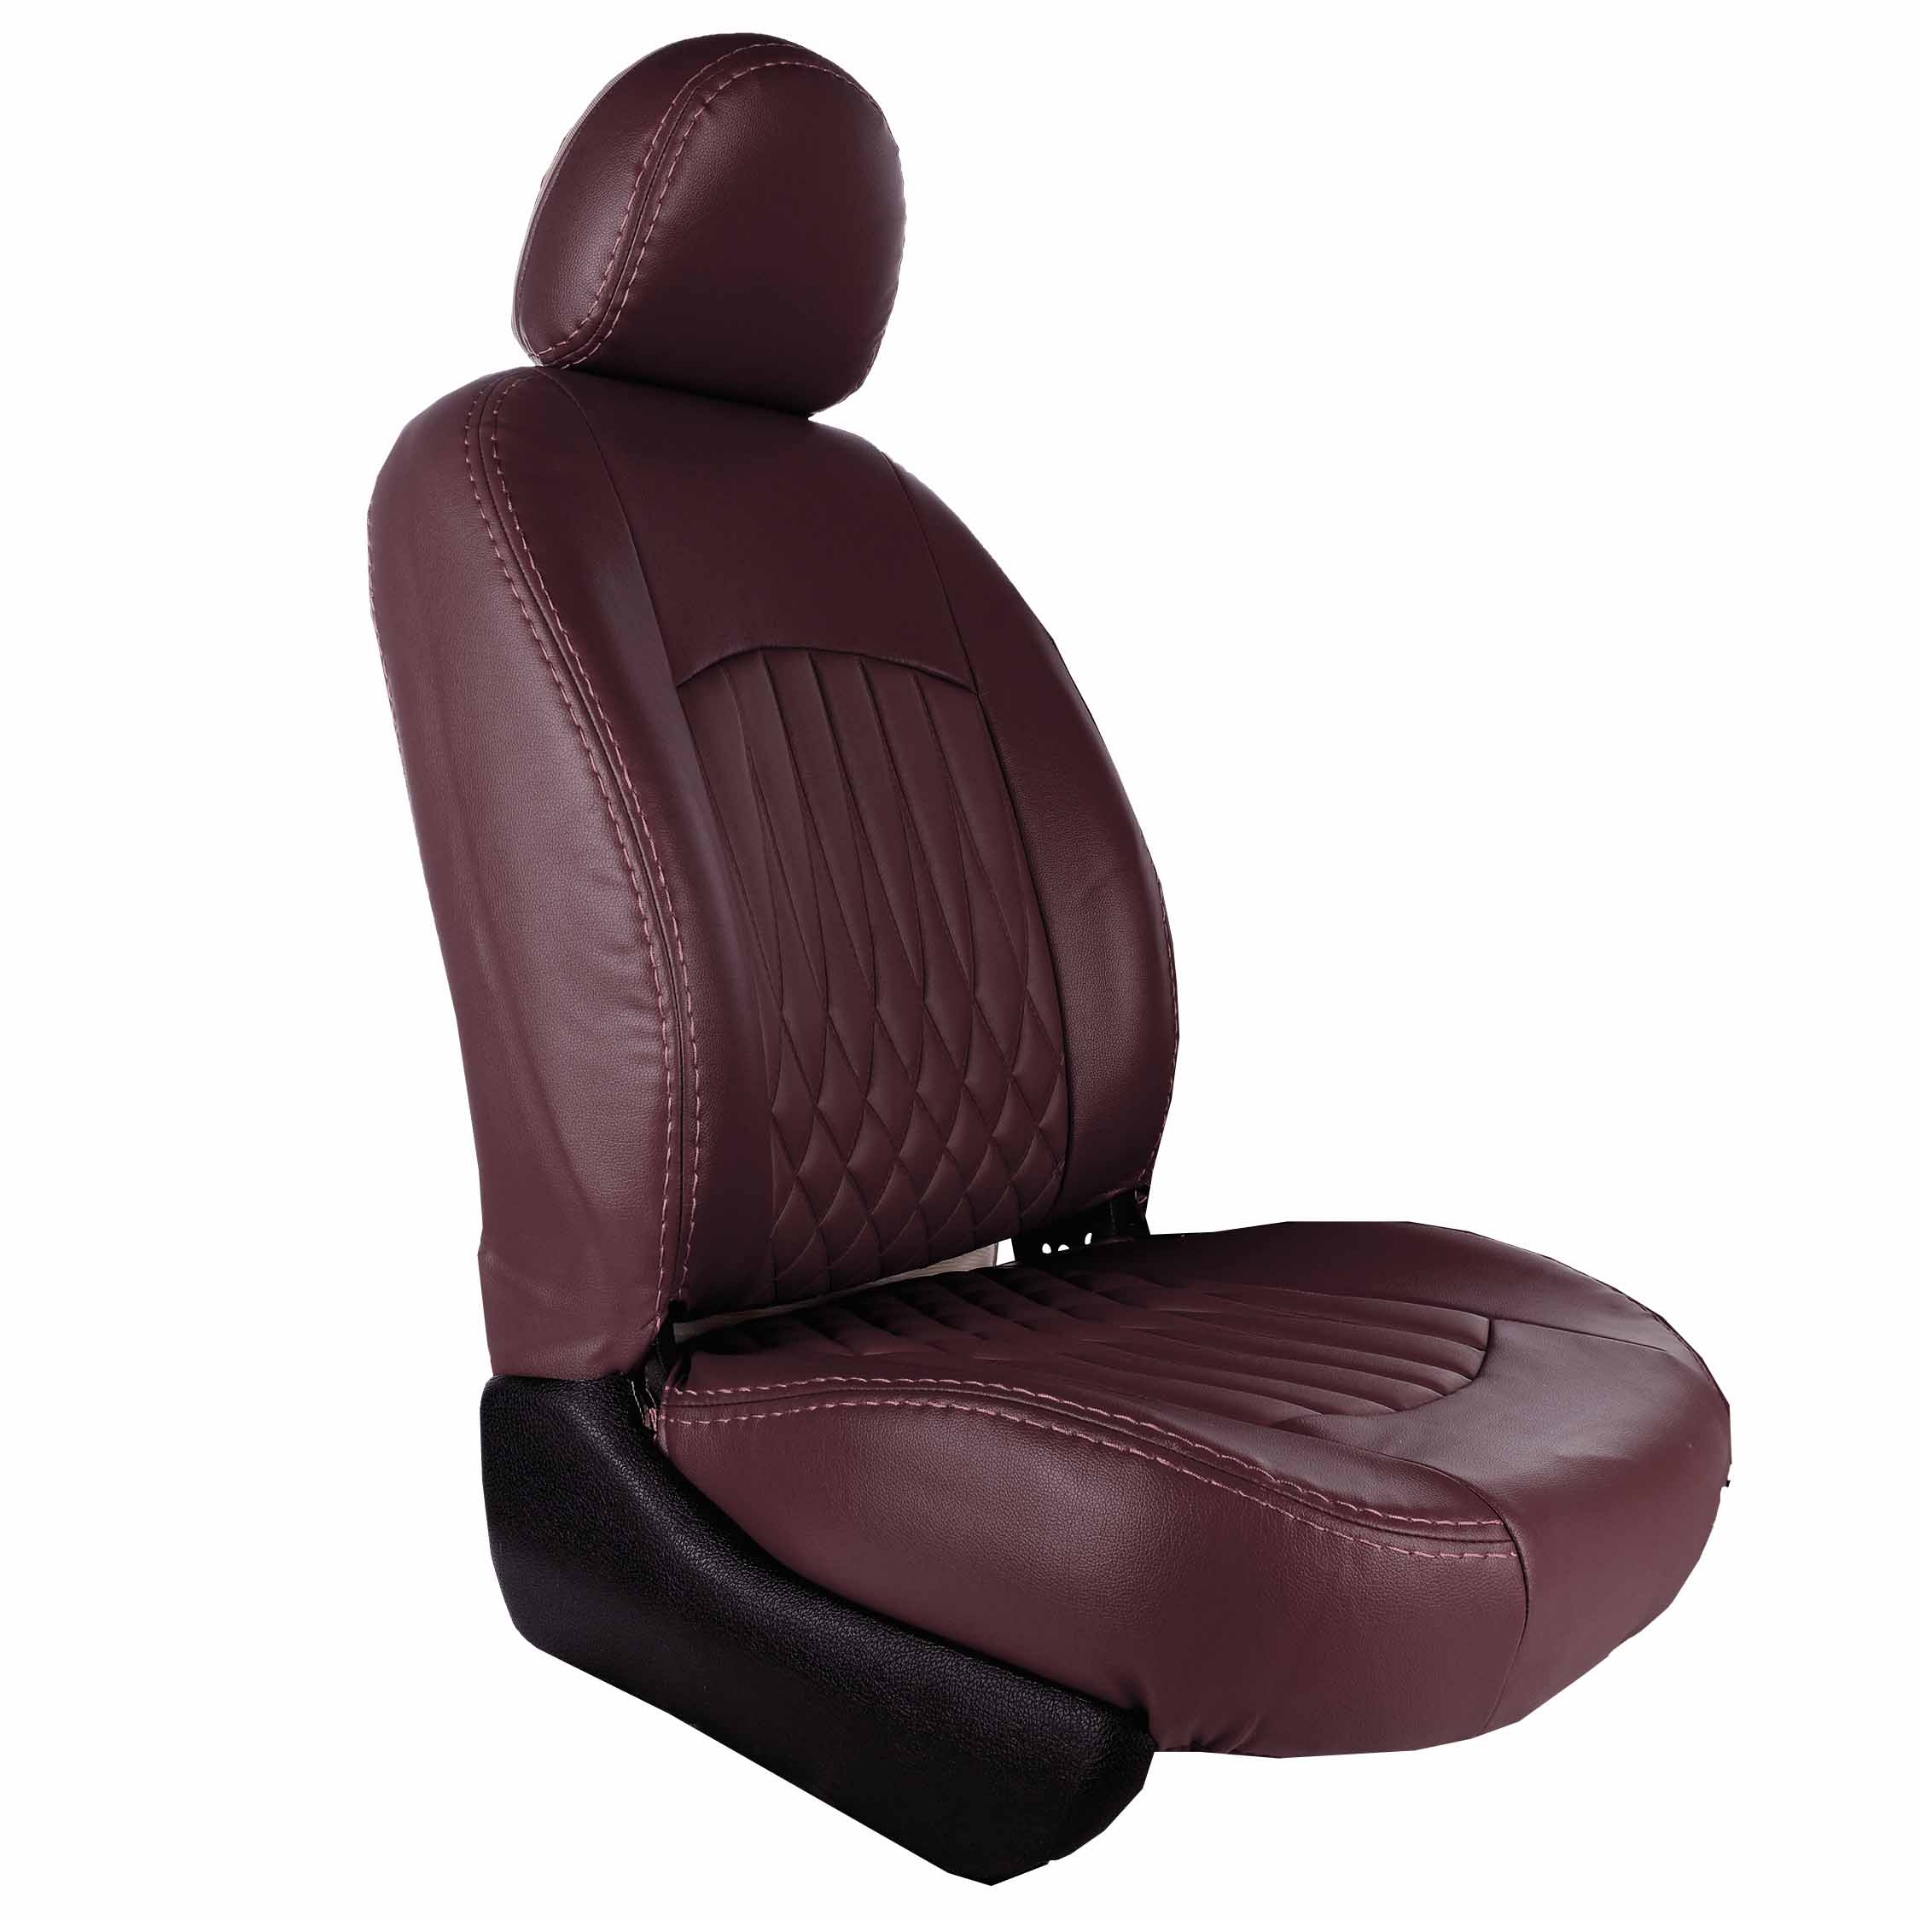 تصویر  روکش صندلی پرشیا صندلی جدید چرم مصنوعی طرح بوگاتی جلوه مدل hue